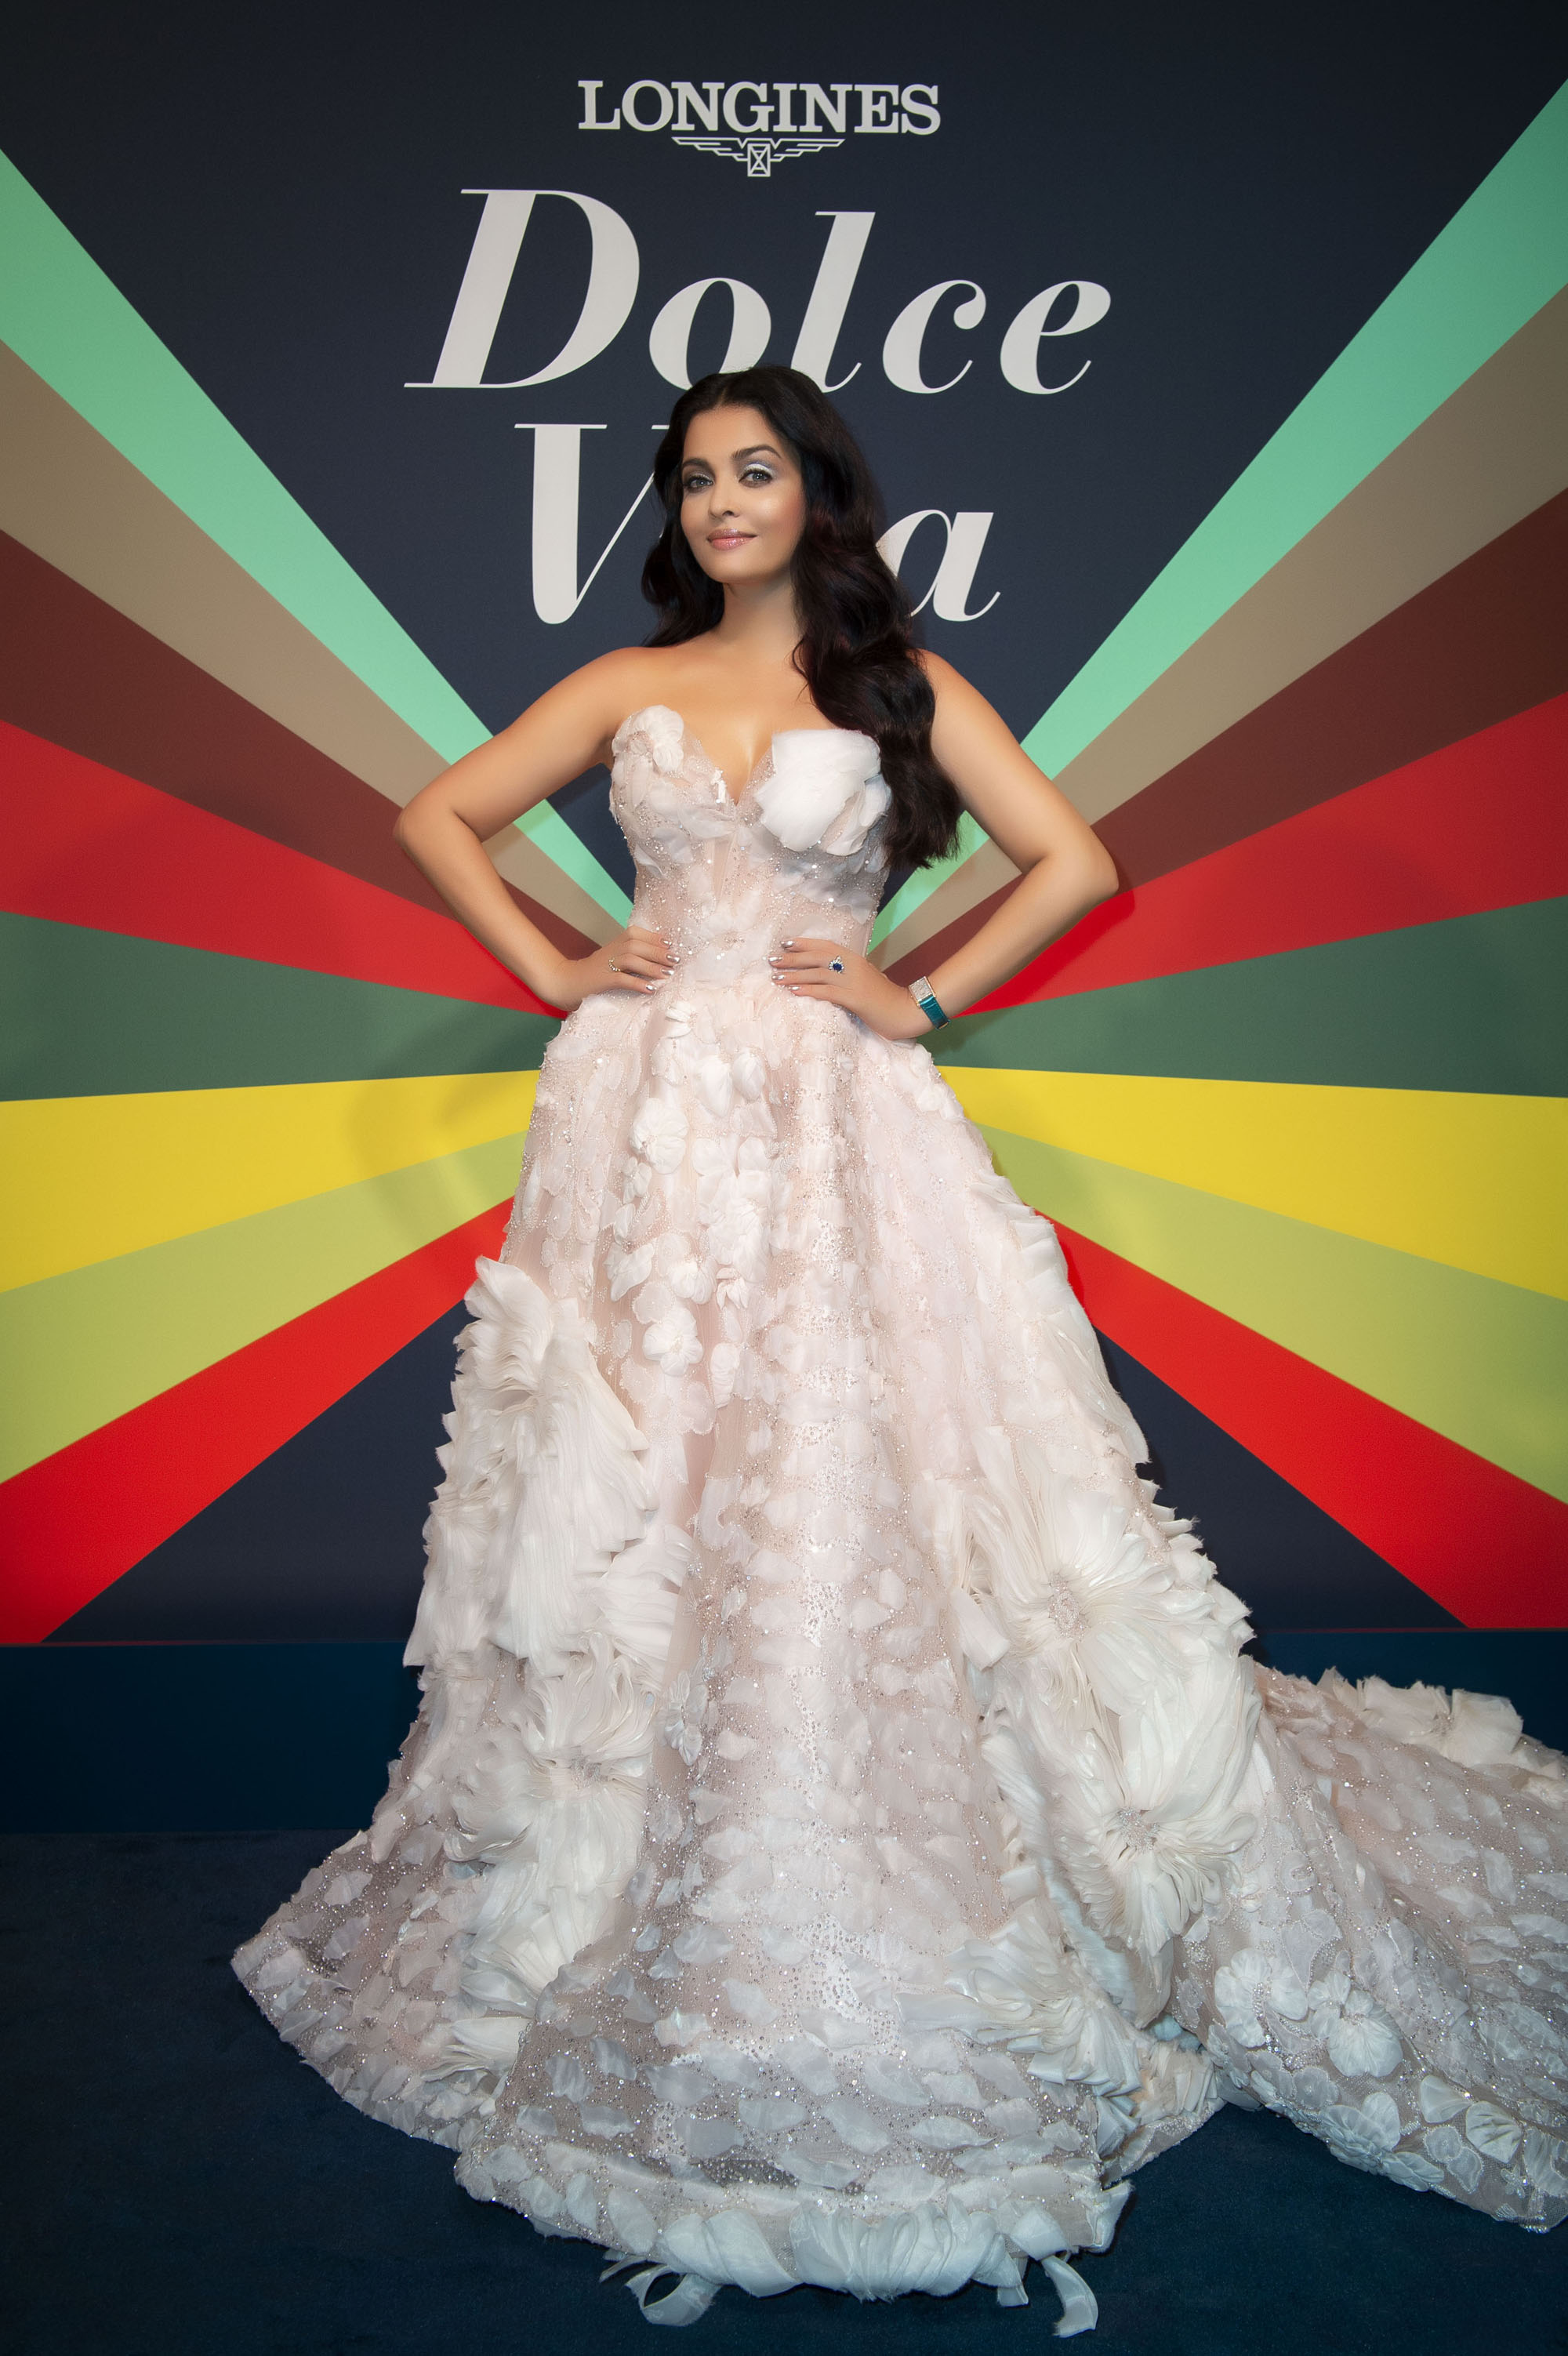 Interview with Longines brand ambassador Aishwarya Rai Bachchan